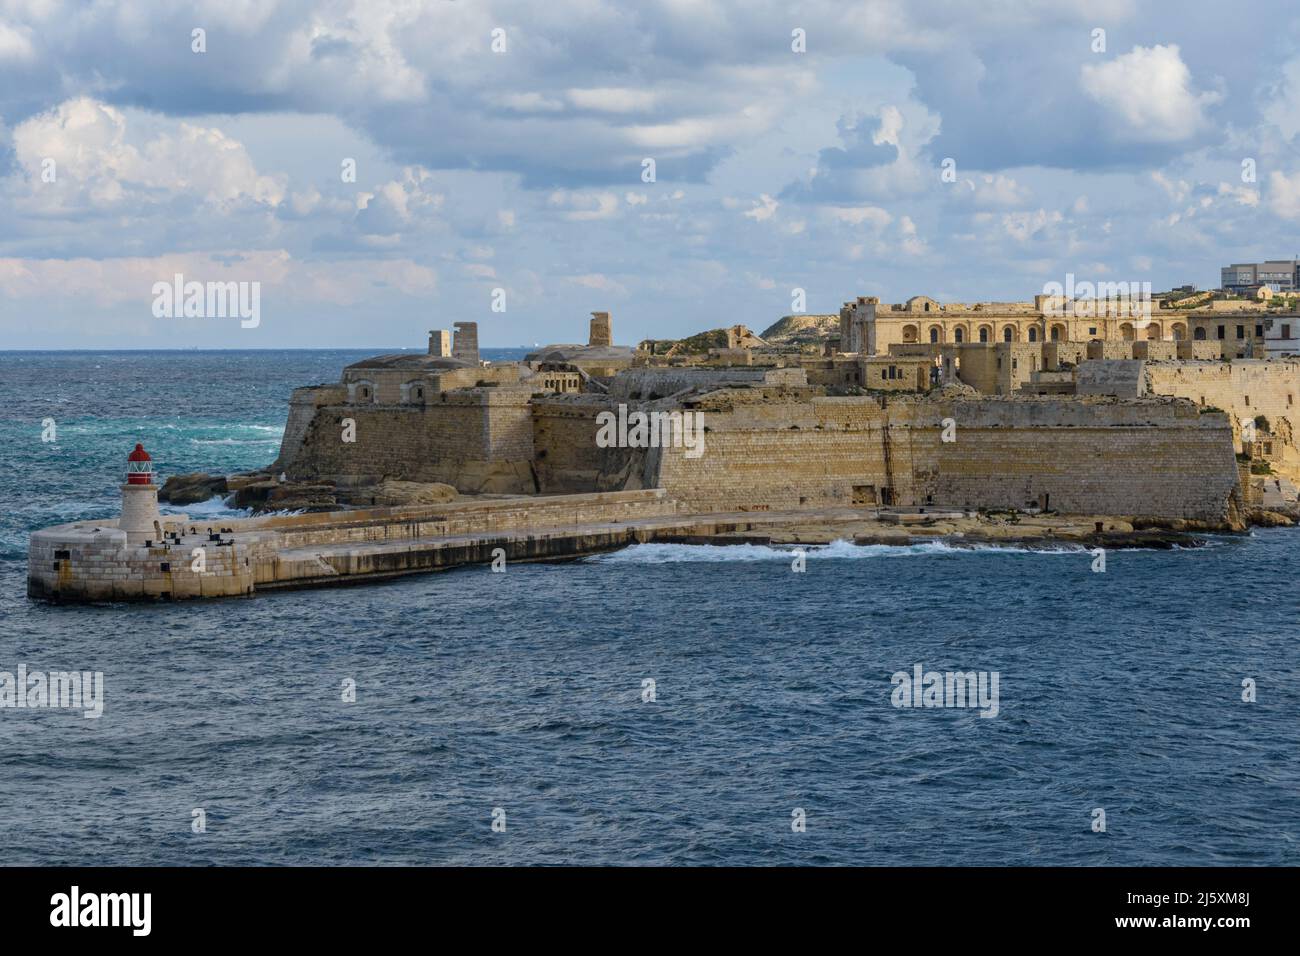 Kalkara, Malta - January 12th 2019: The lighthouse on the Ricasoli Breakwater with the 17th century Fort Ricasoli. Stock Photo